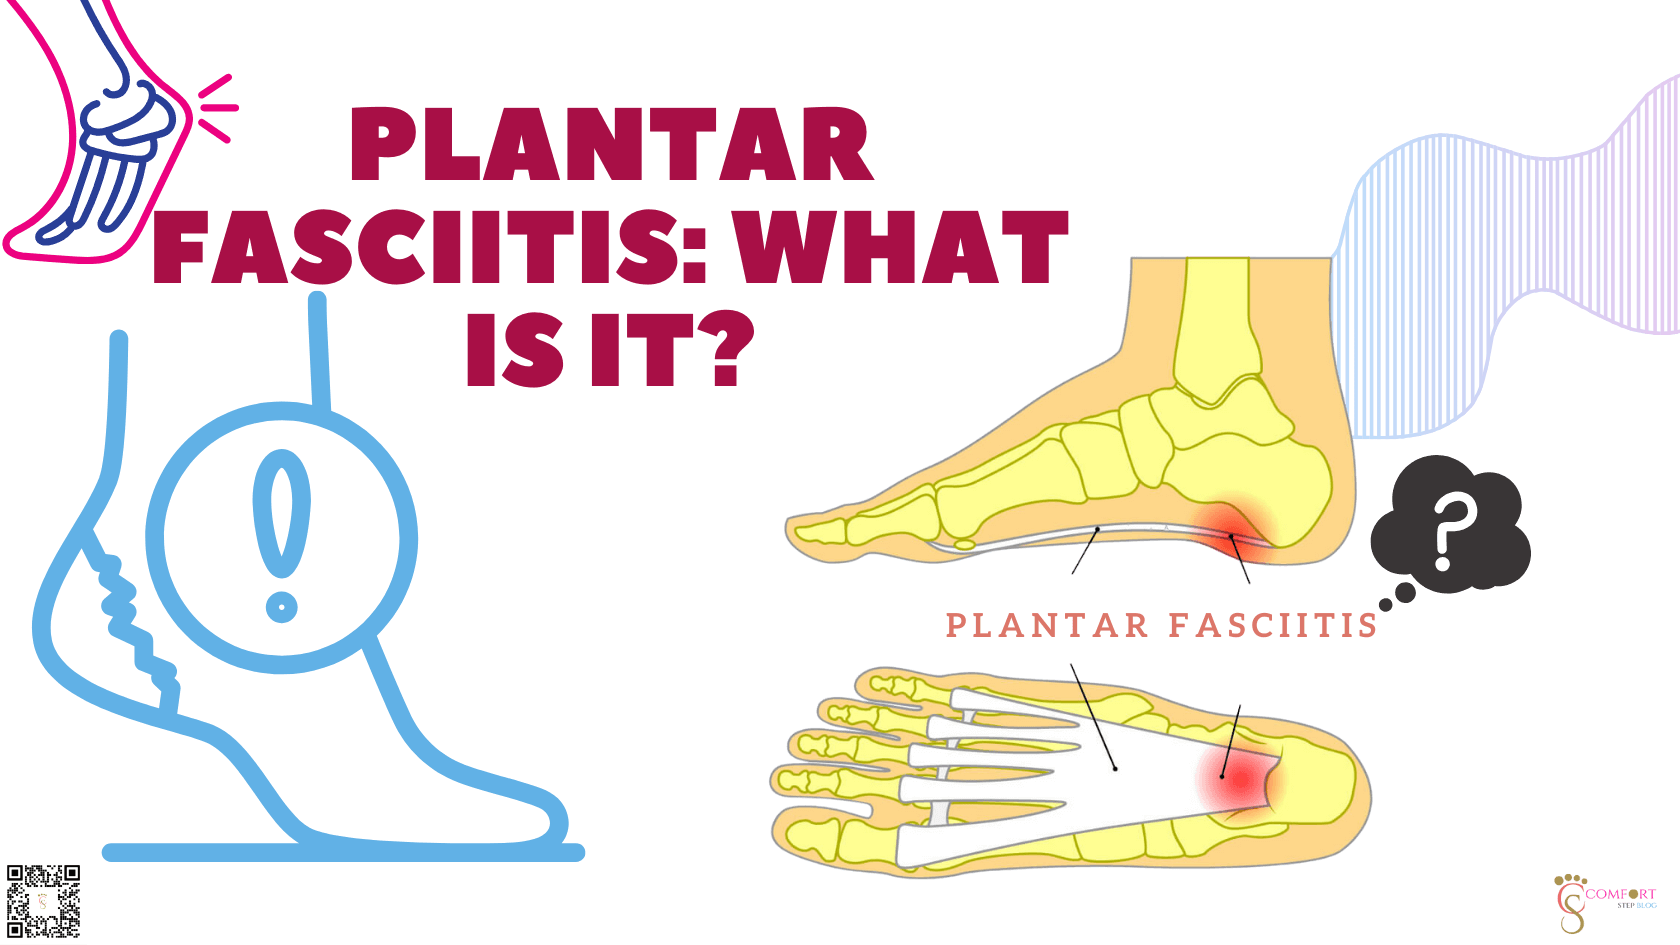 Plantar Fasciitis: What Is It?